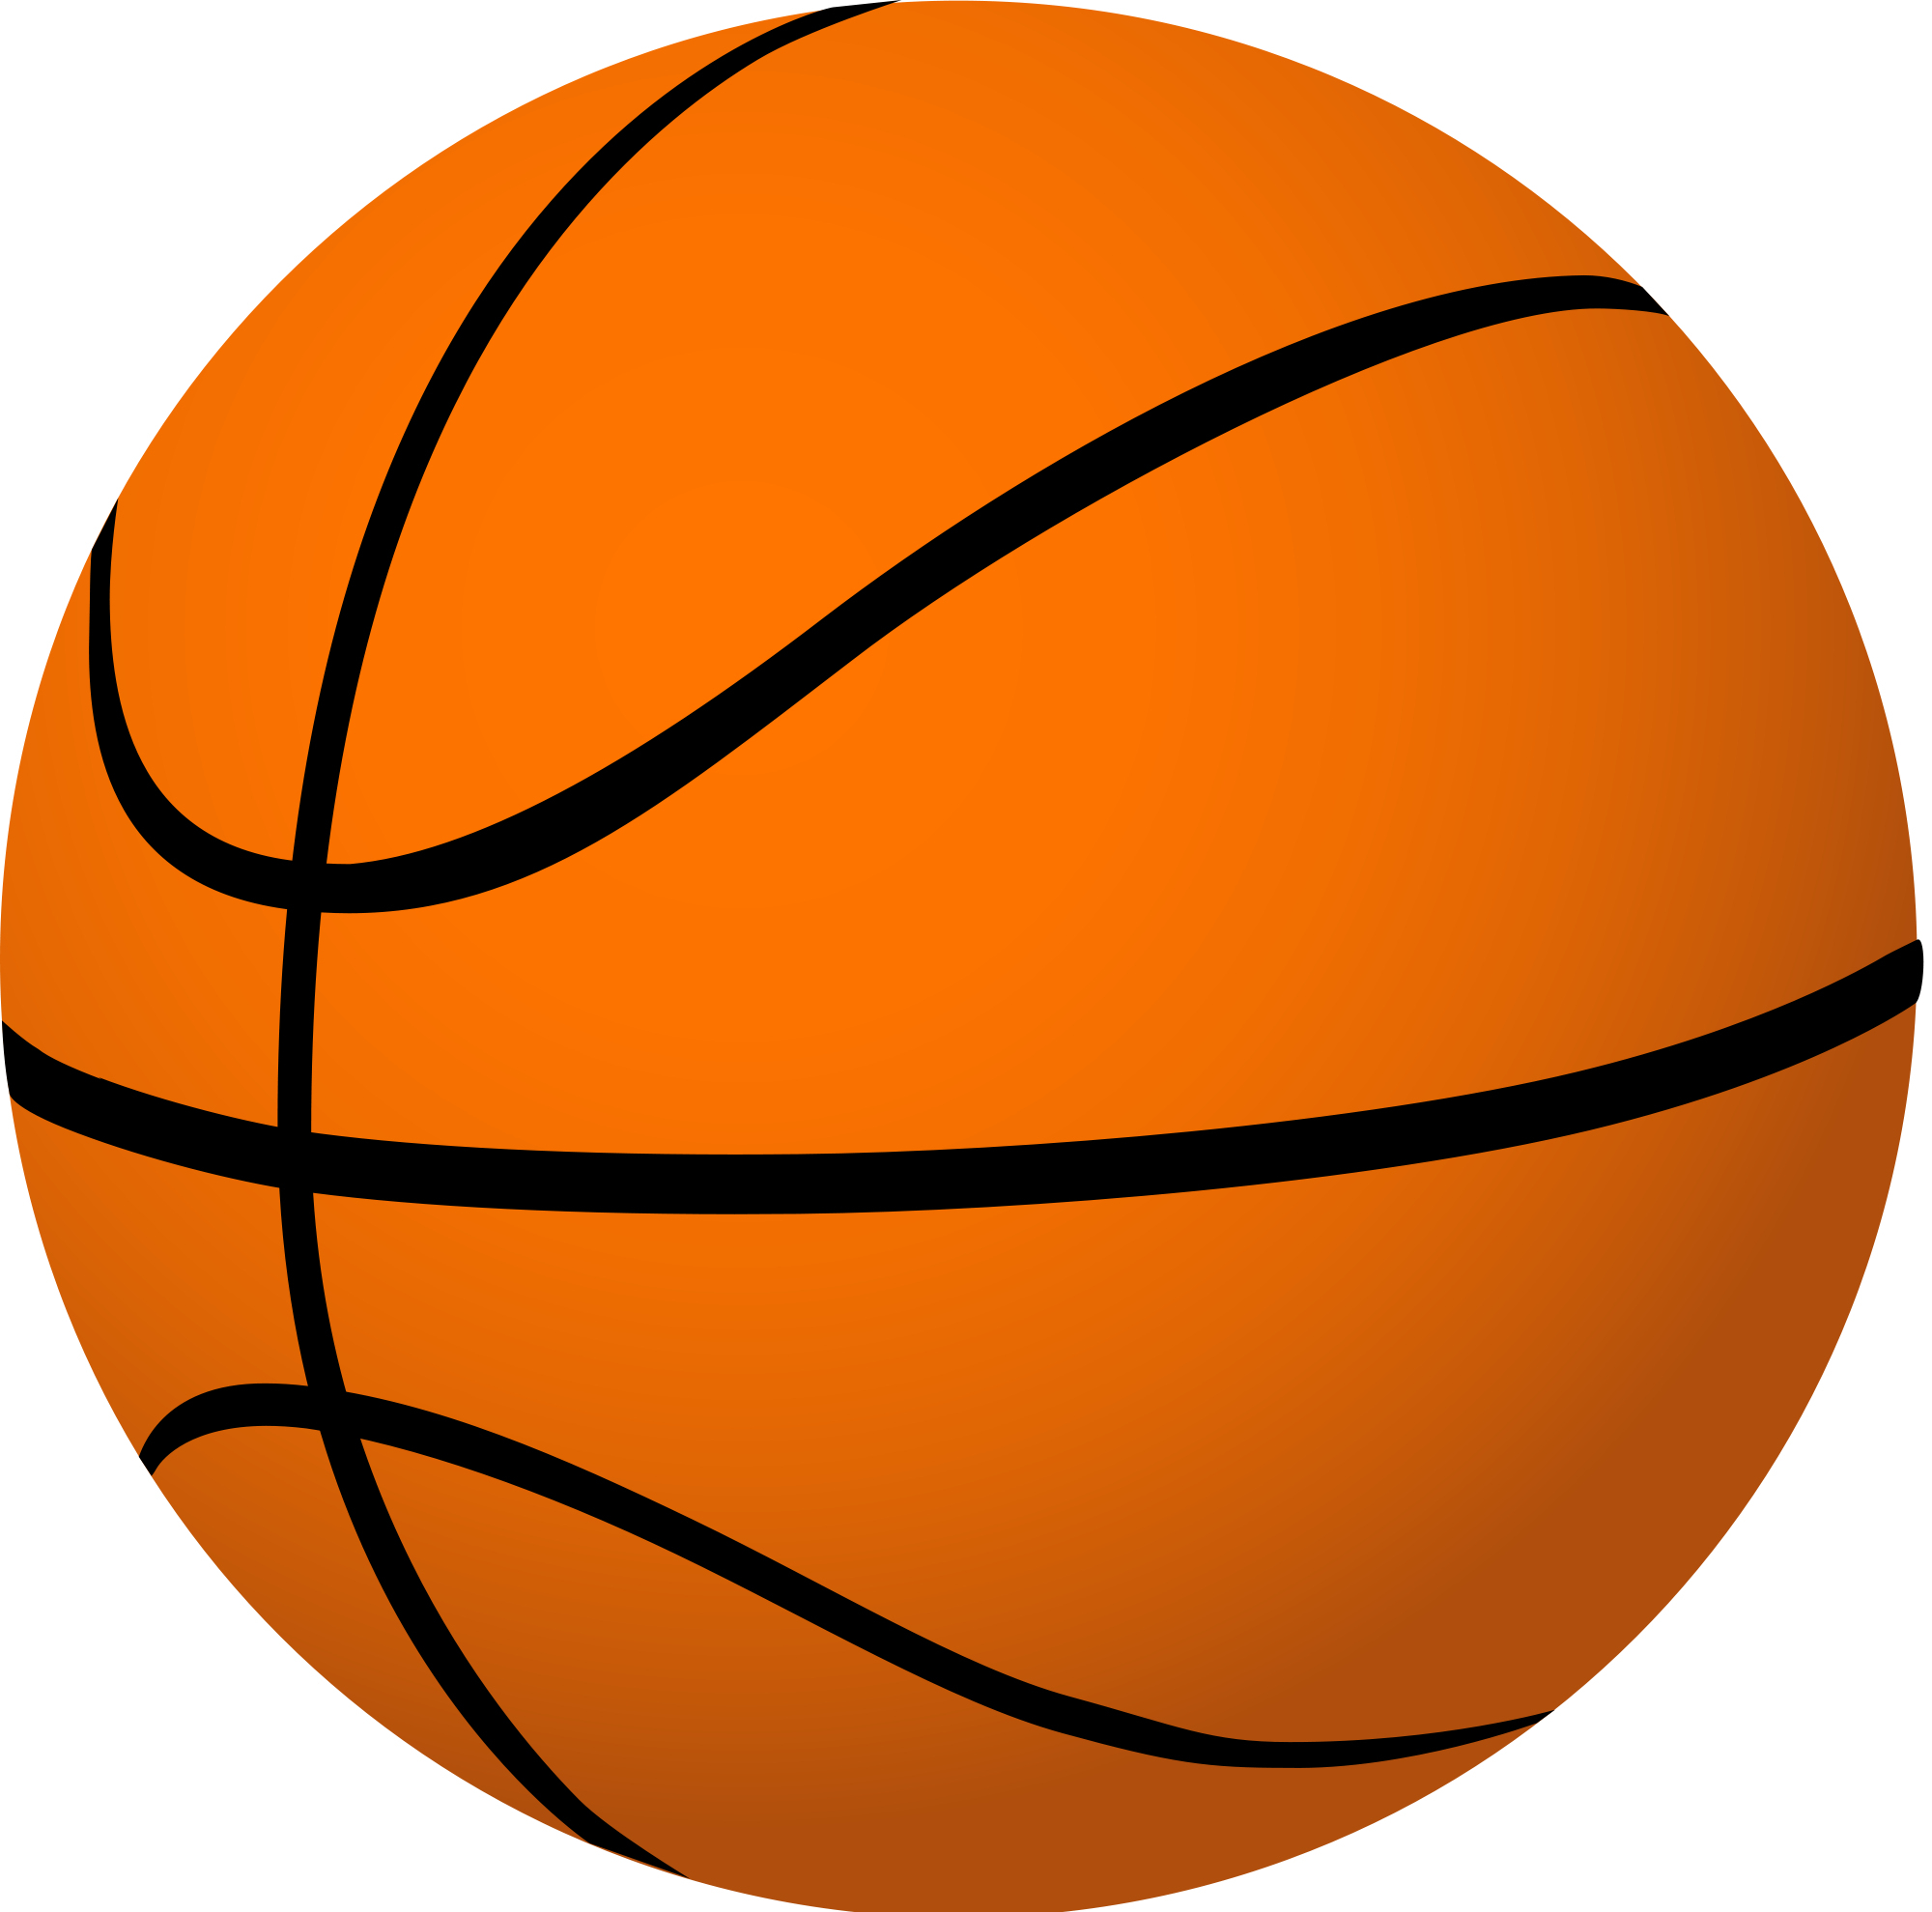 Basketball Royalty Free Download Free Printable - Rr Collections - Free Printable Basketball Court